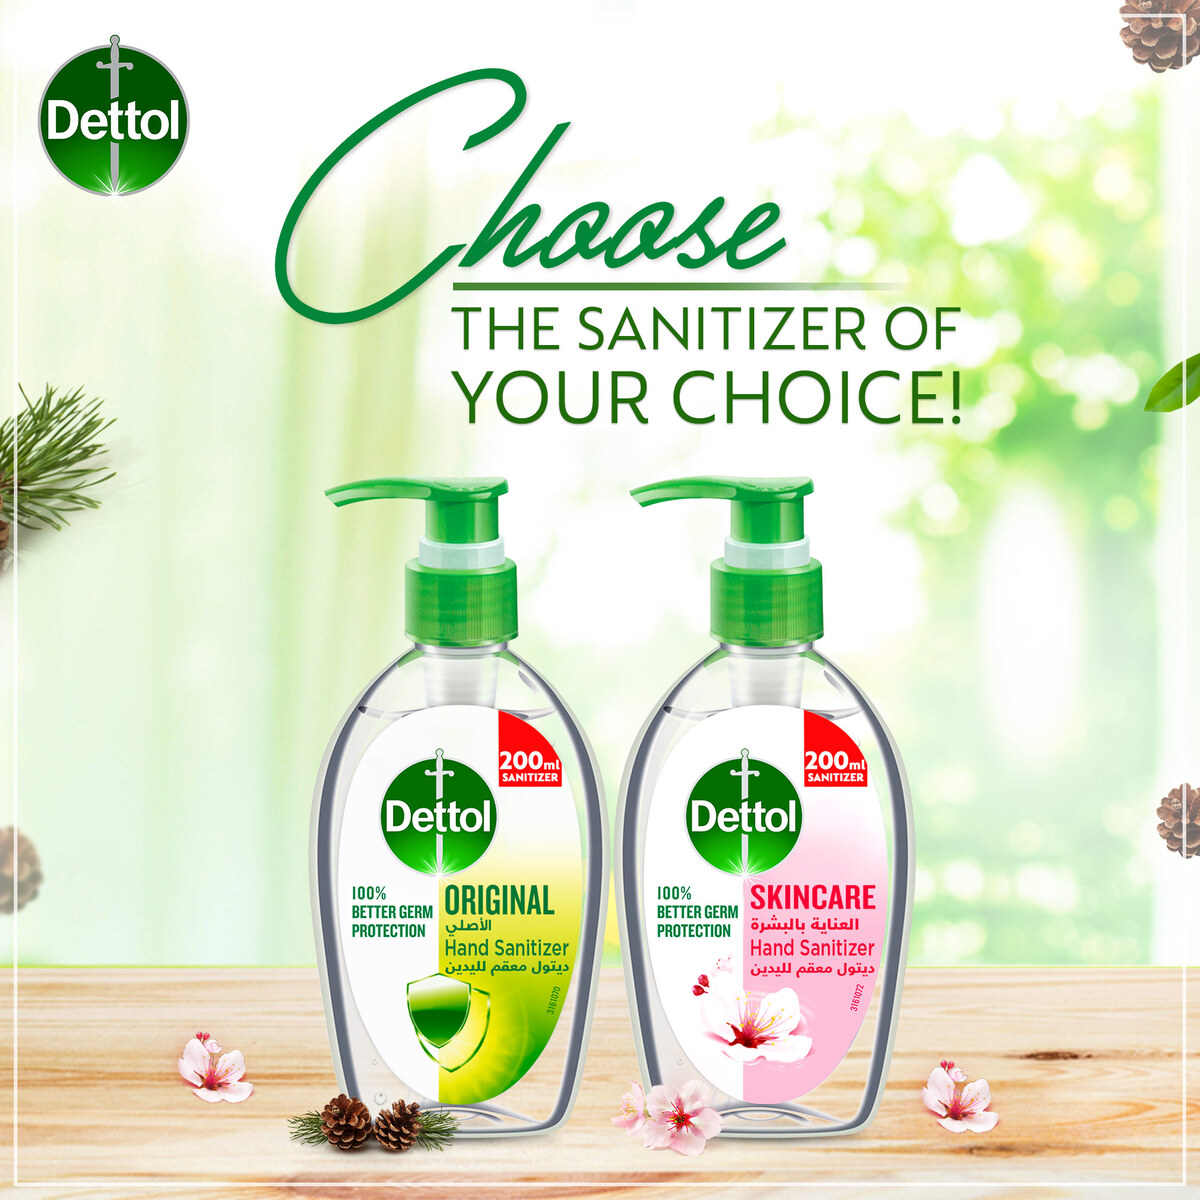 Dettol Hand Sanitizer Original for 100% Better Germ Protection & Personal Hygiene 200 ml